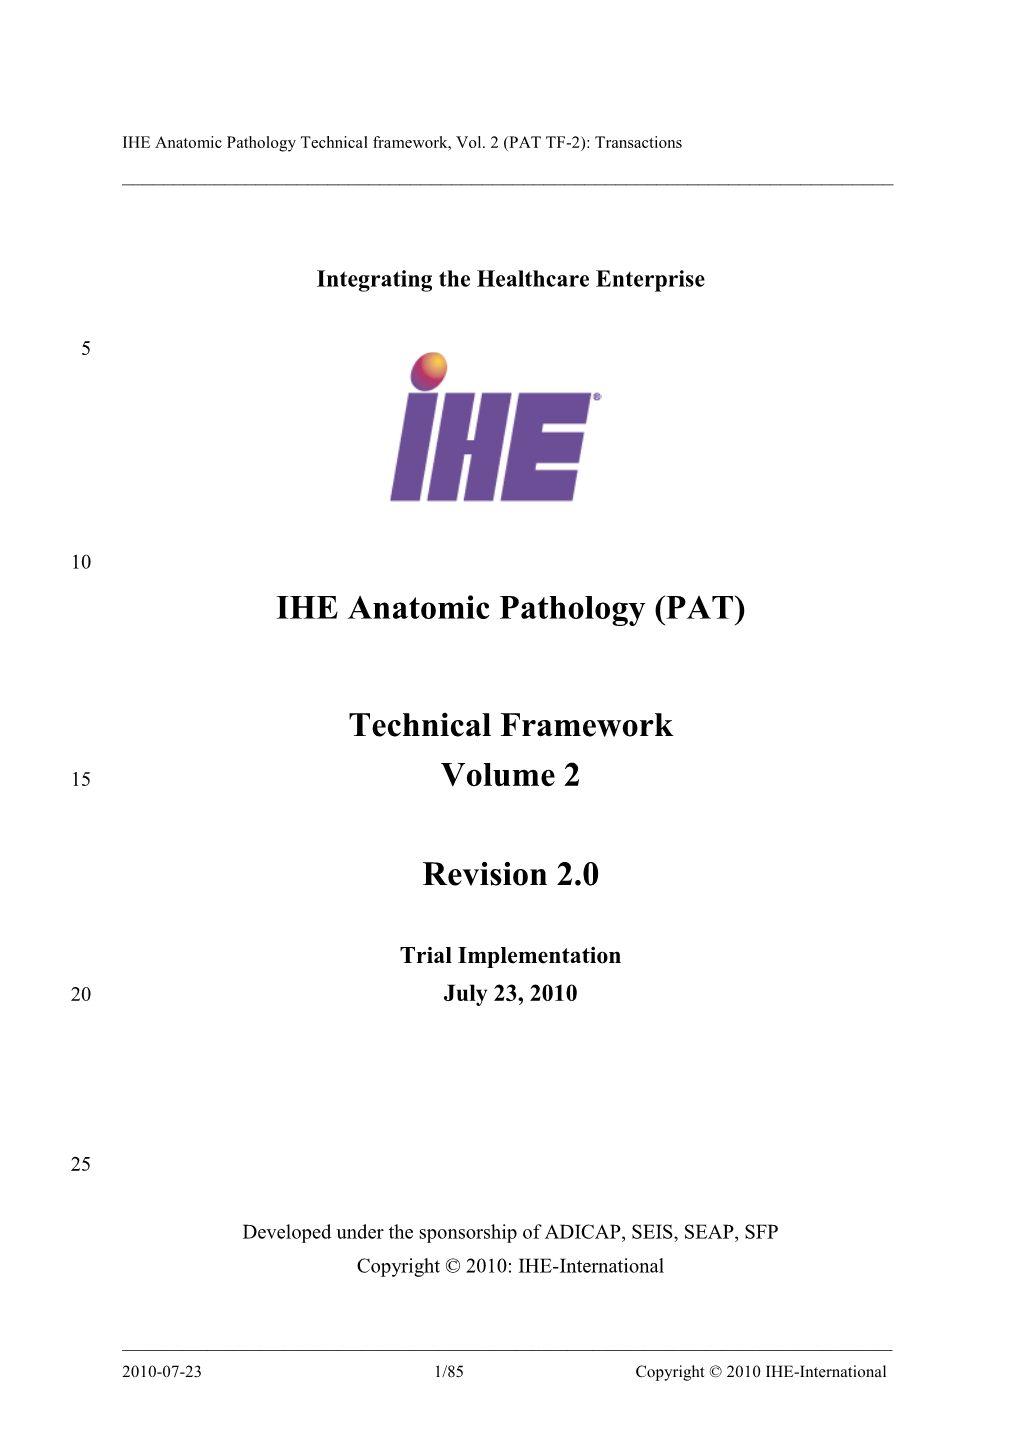 IHE Anatomic Pathology Technical Framework, Vol. 2 (PAT TF-2): Transactions ______